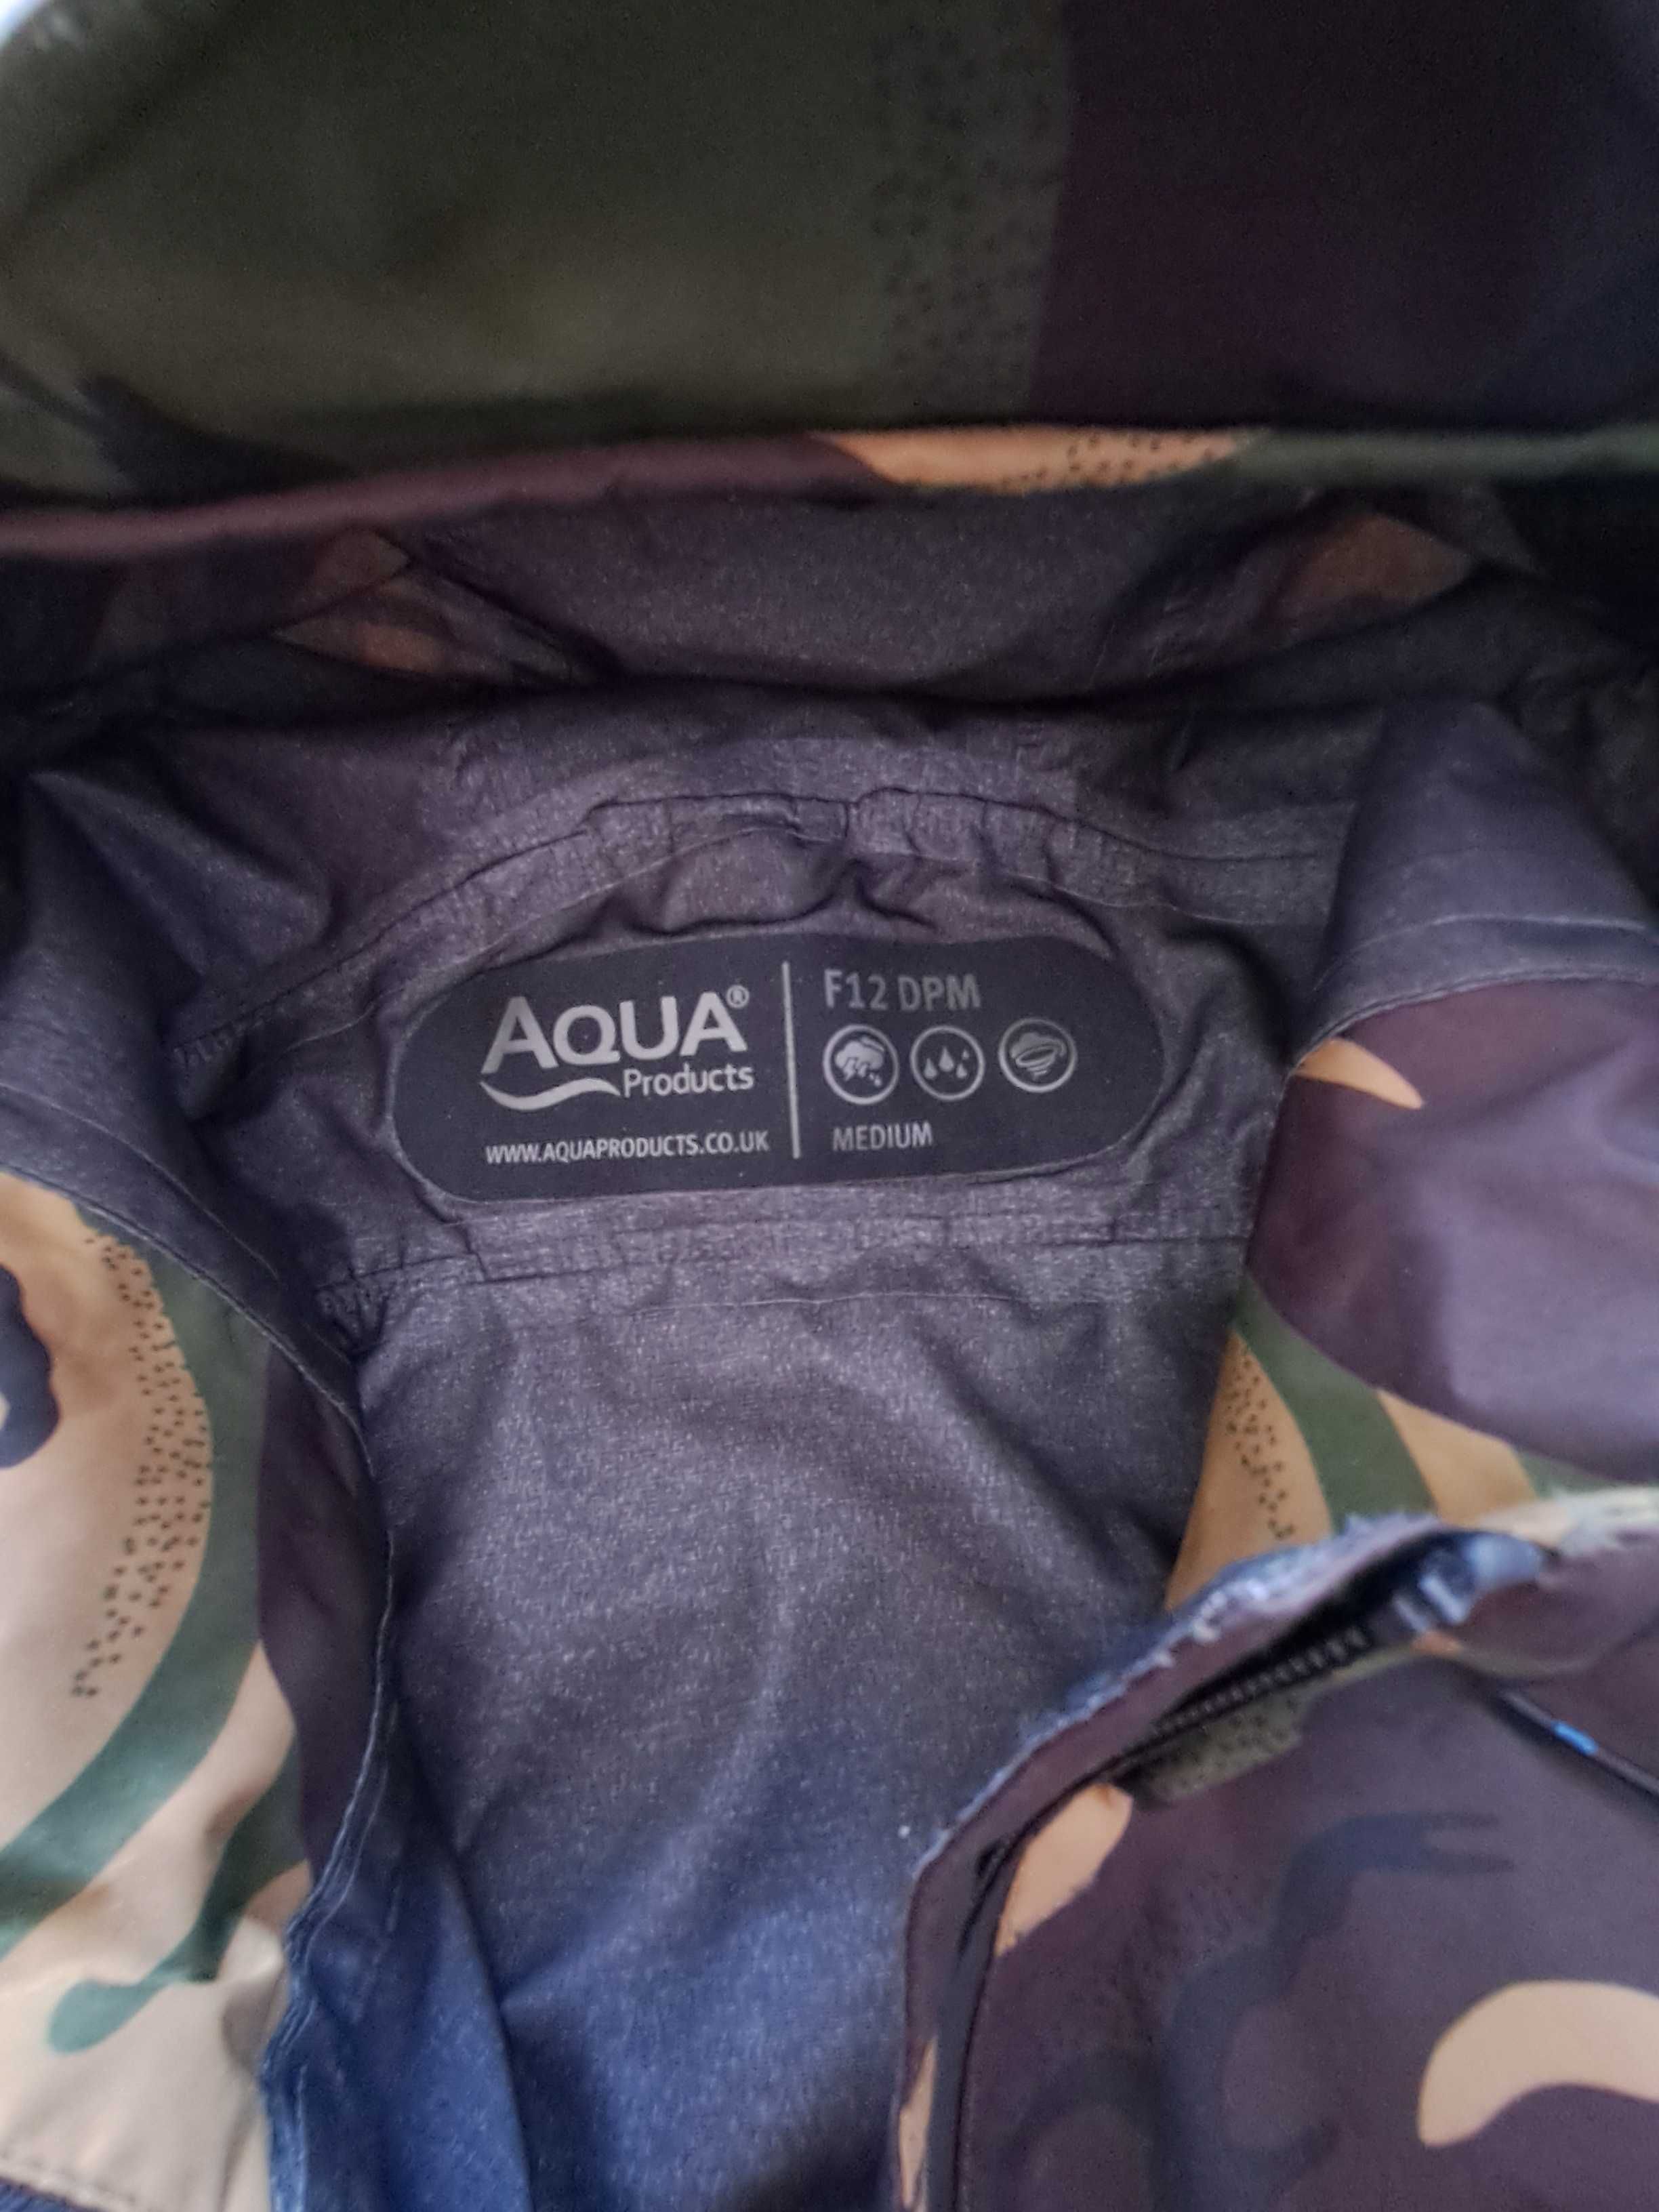 AQUA F12 DPM jacket Trakker